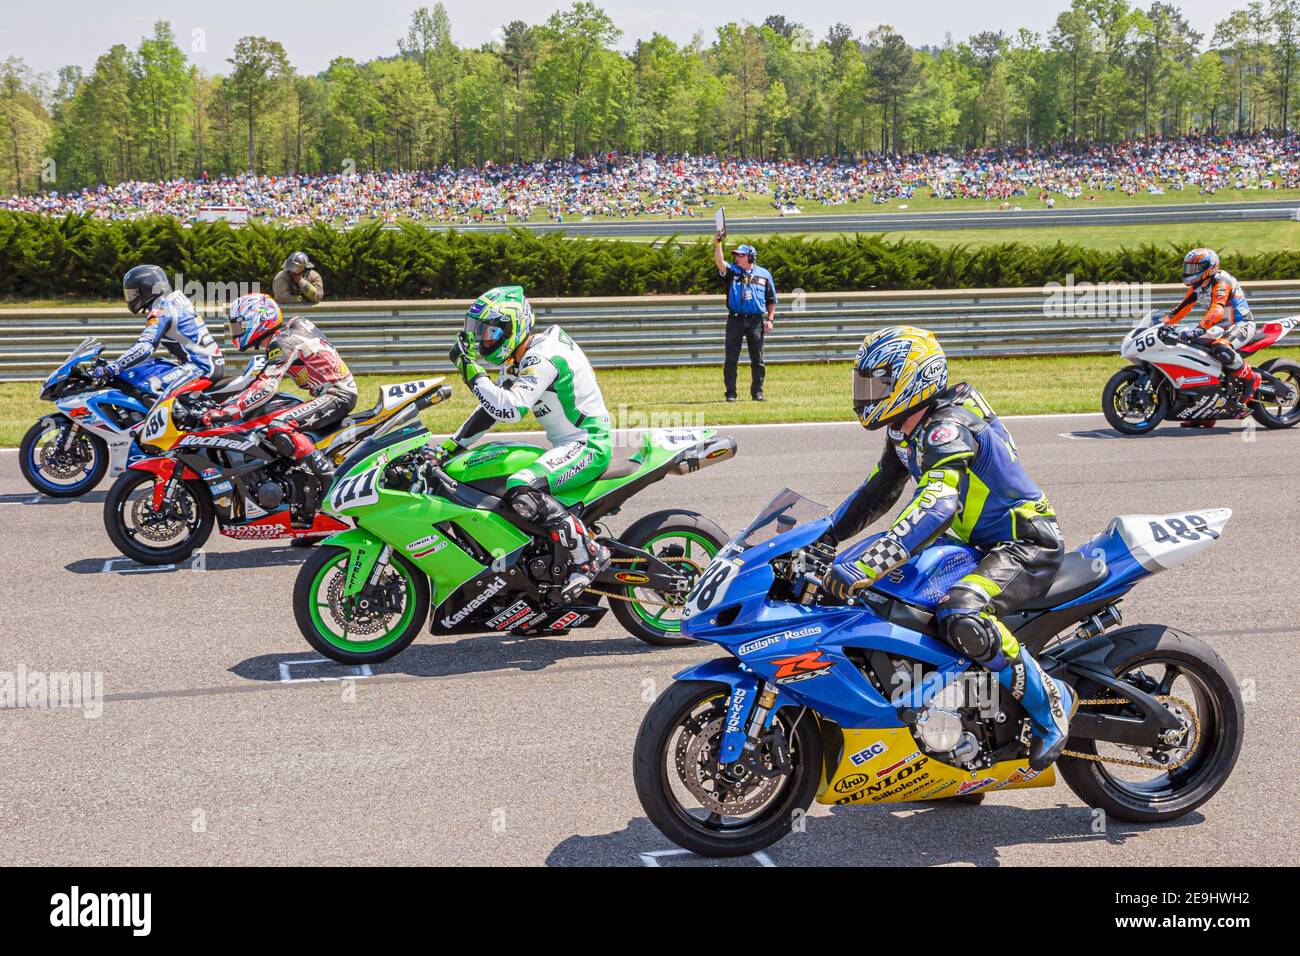 Birmingham Alabama,Barber Motorsports Park Honda Superbike Classic,race racing motorcycle start starting line, Stock Photo